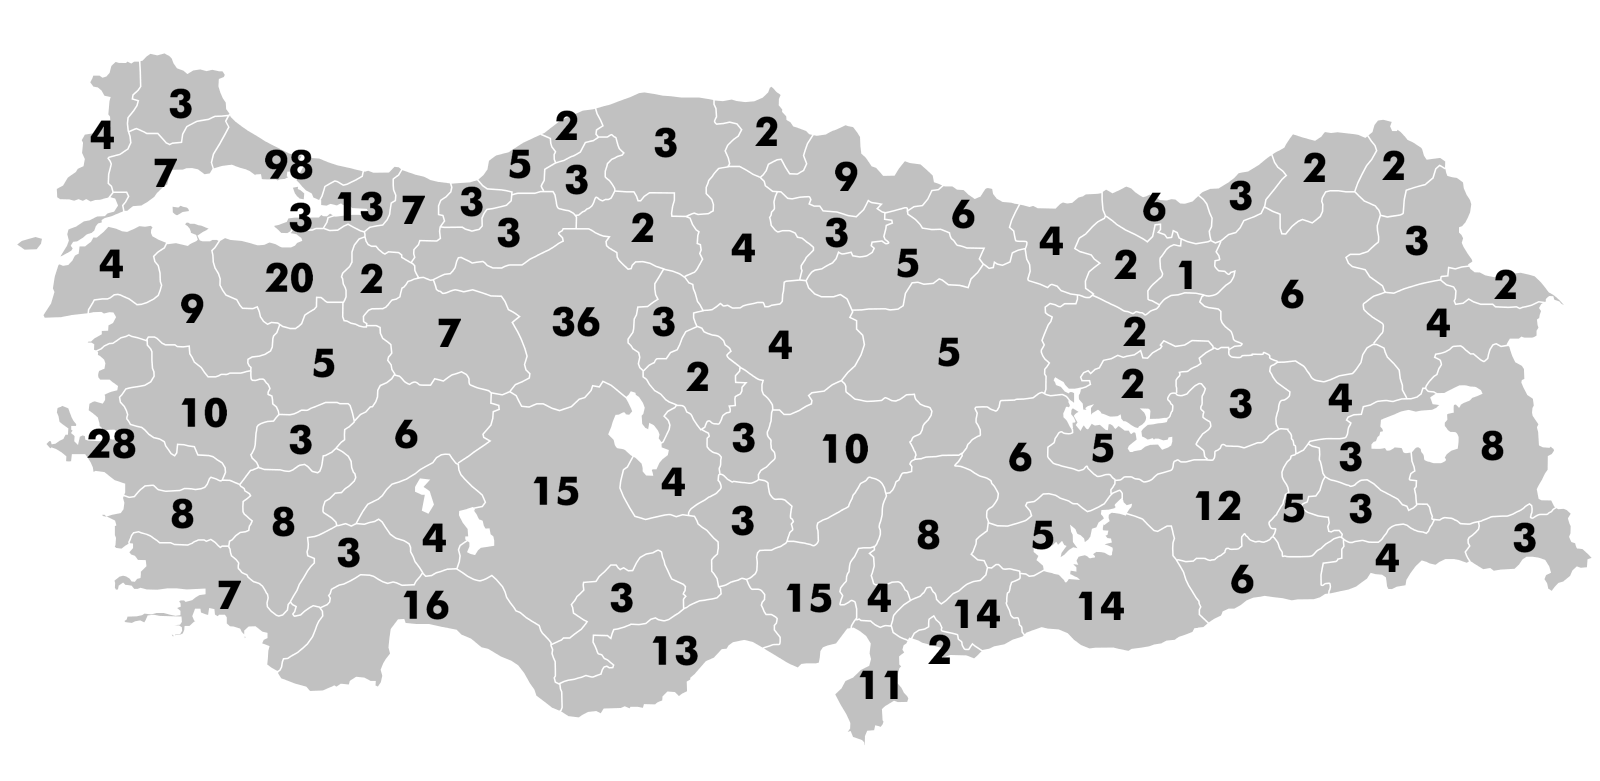 File:Turkey MP distribution 2018.png - Wikimedia Commons